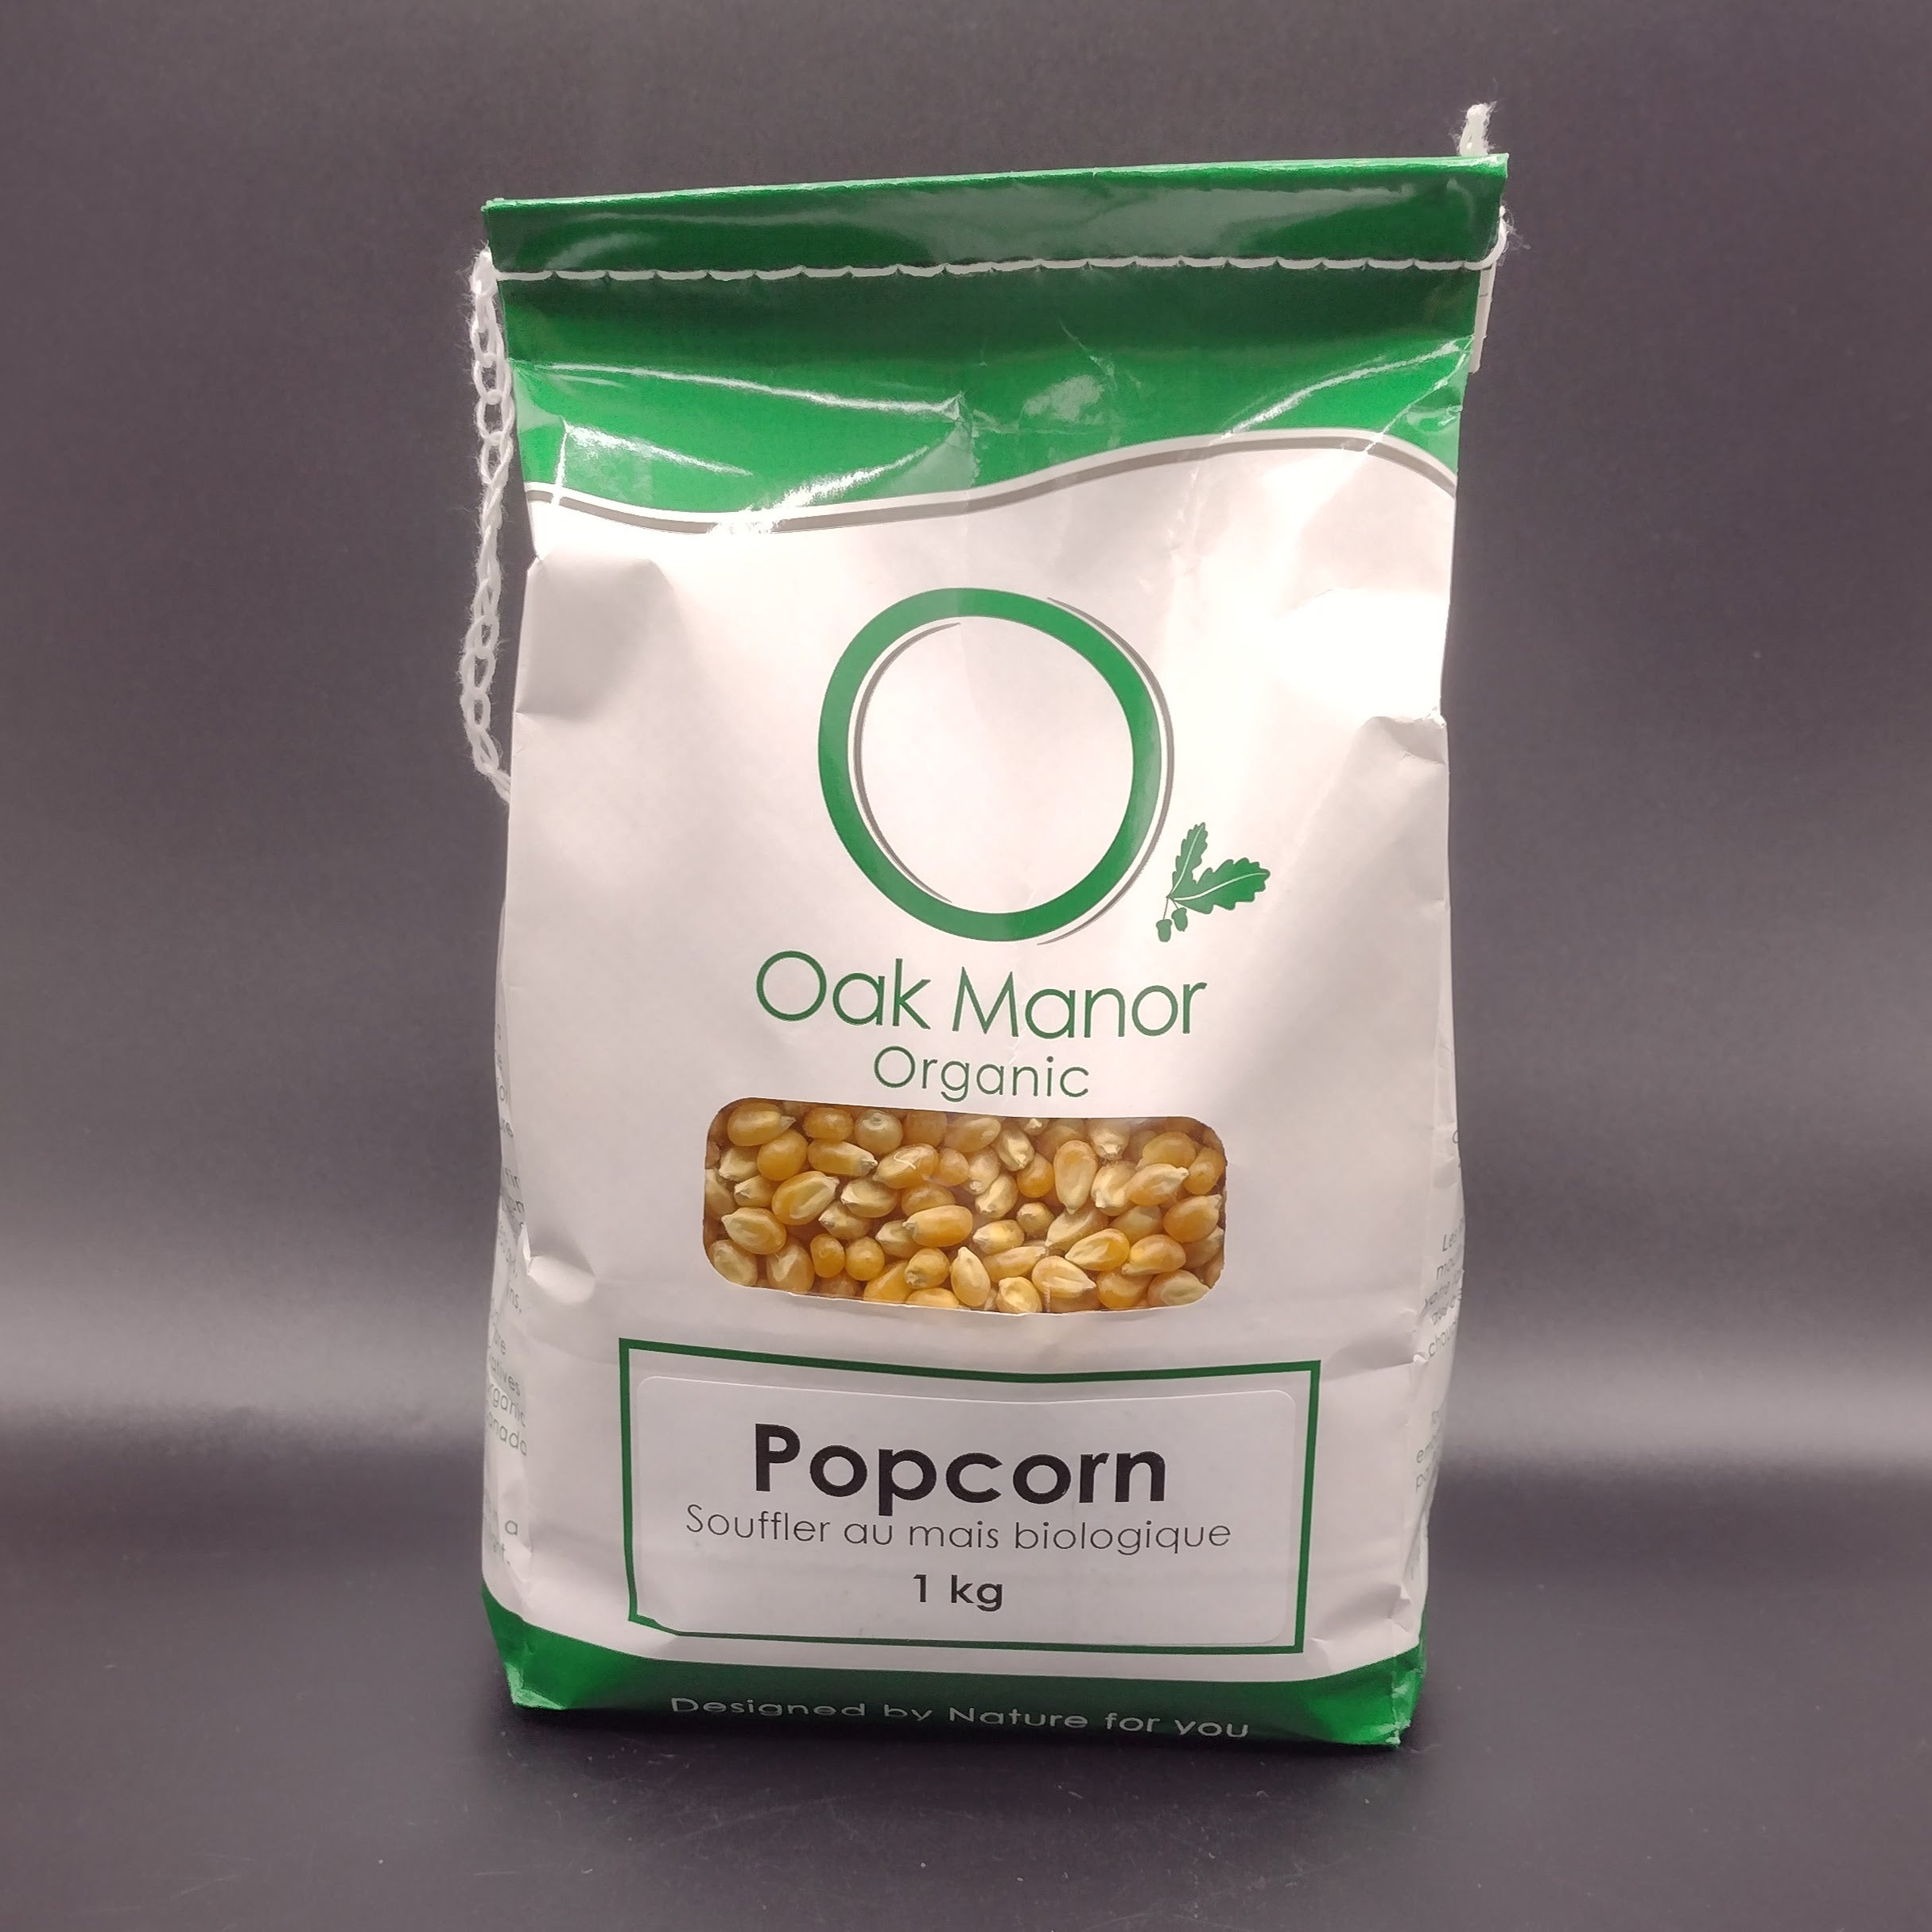 Popcorn, Organic Kernels (1 kg)